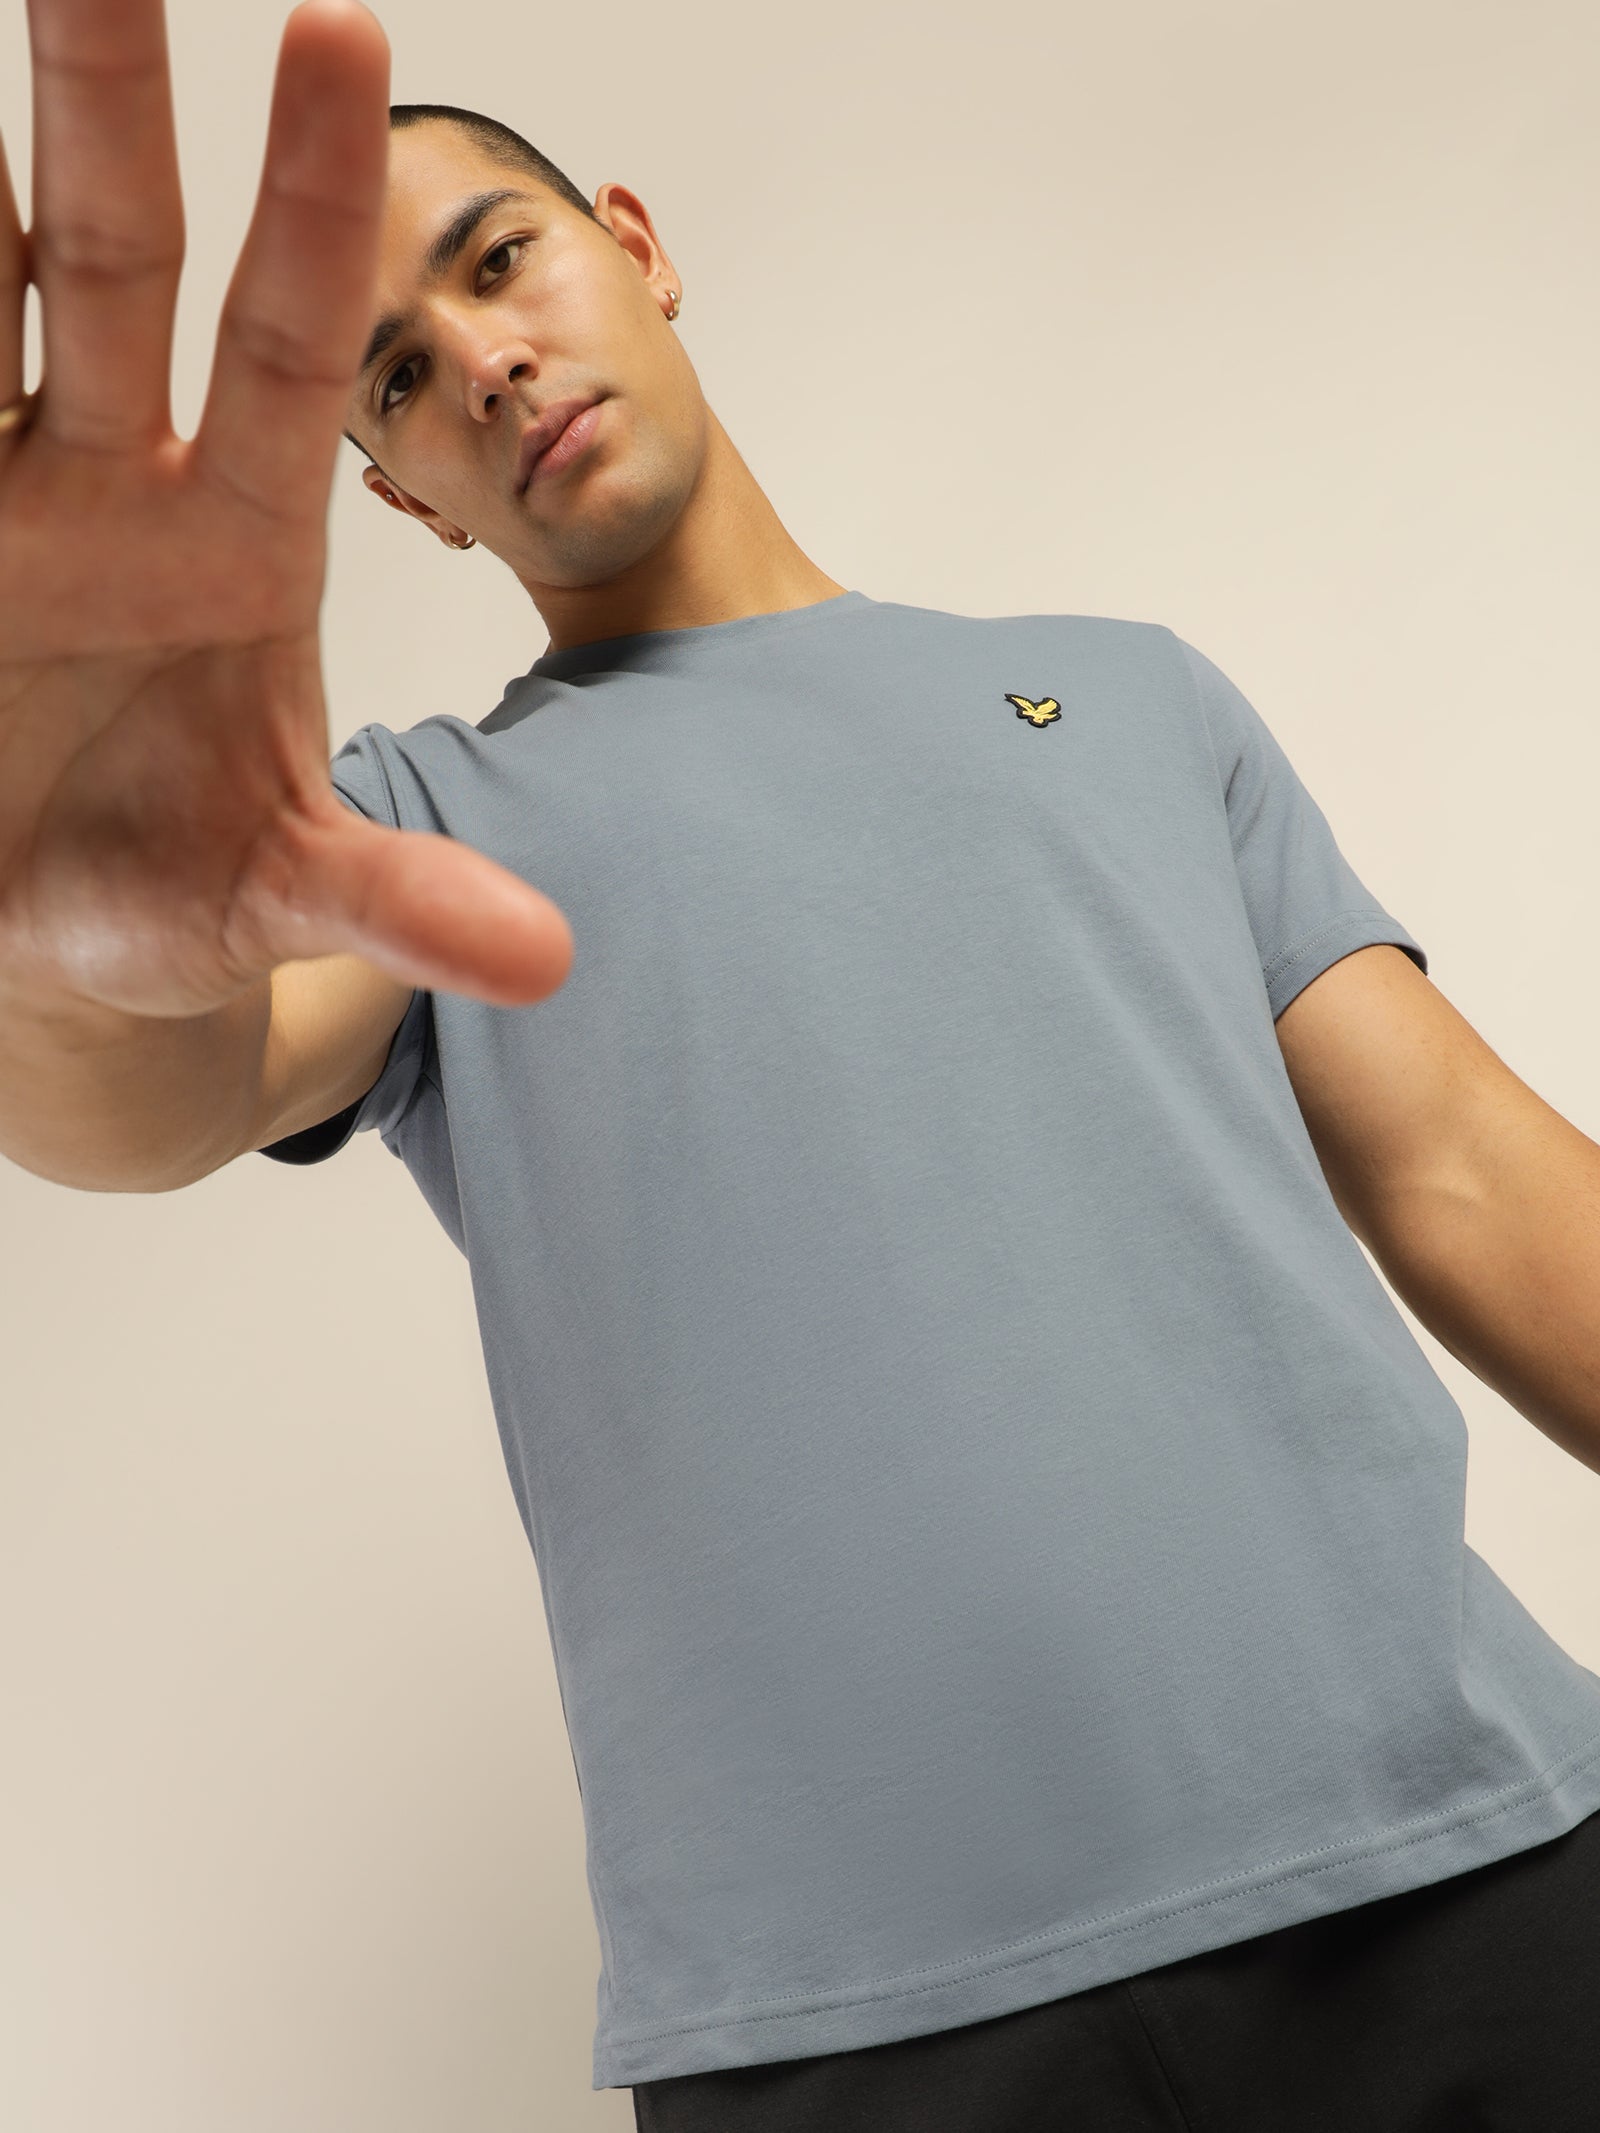 Plain T-Shirt in Slate Grey